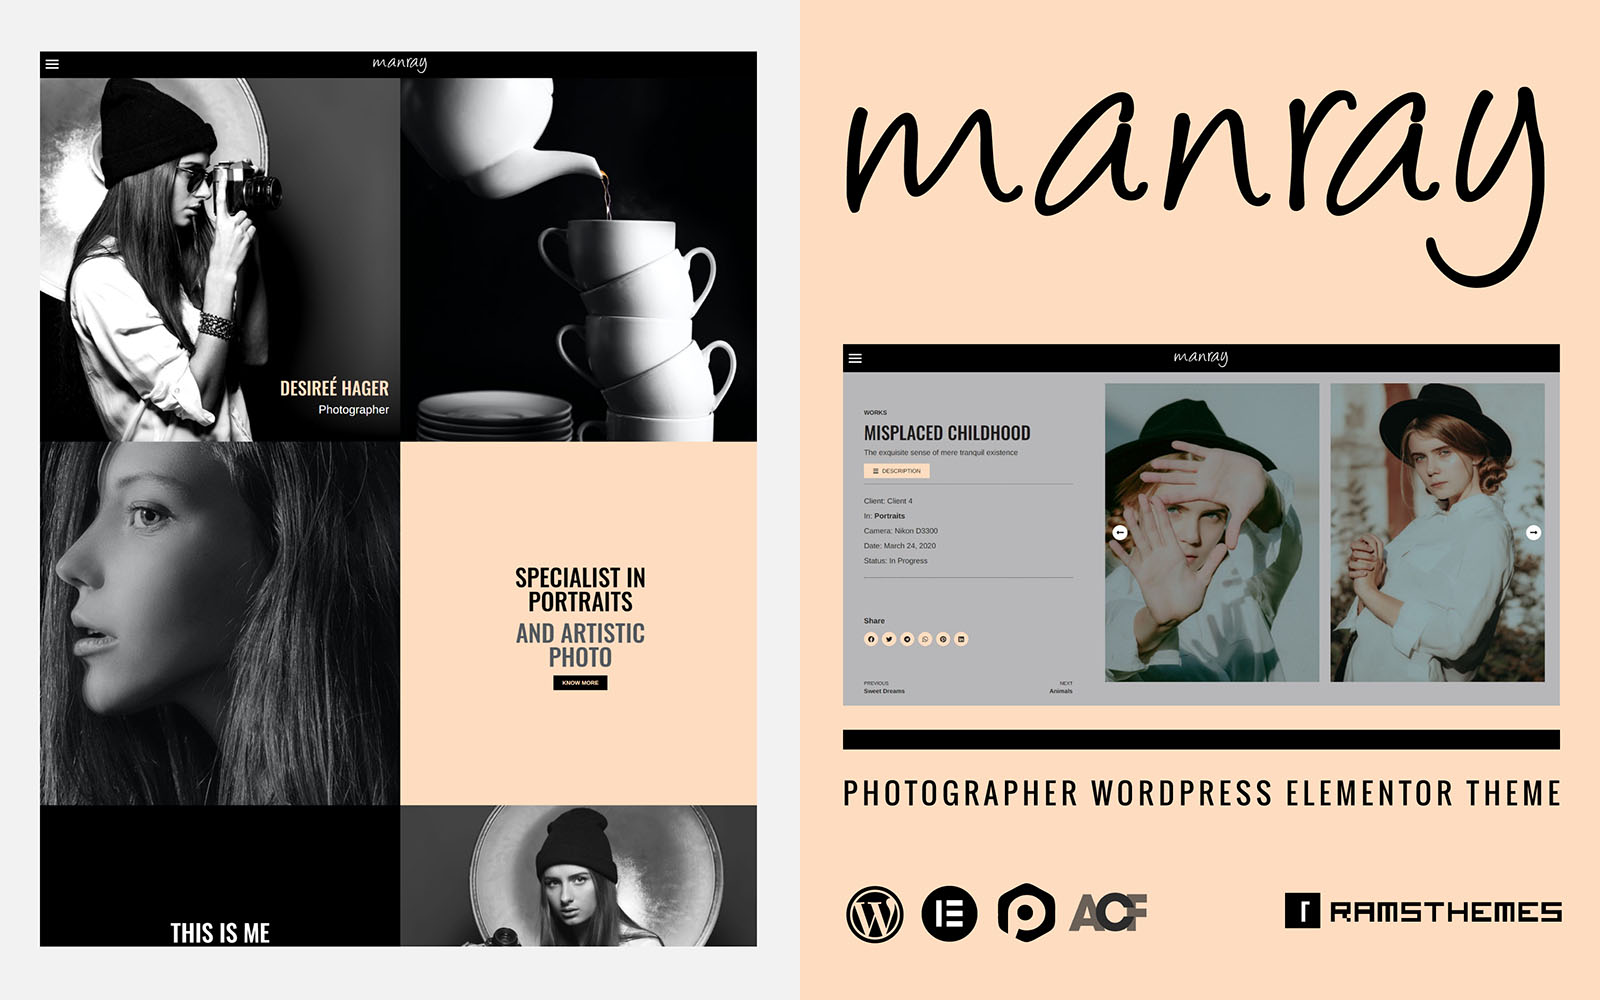 MANRAY - Photographer WordPress Theme